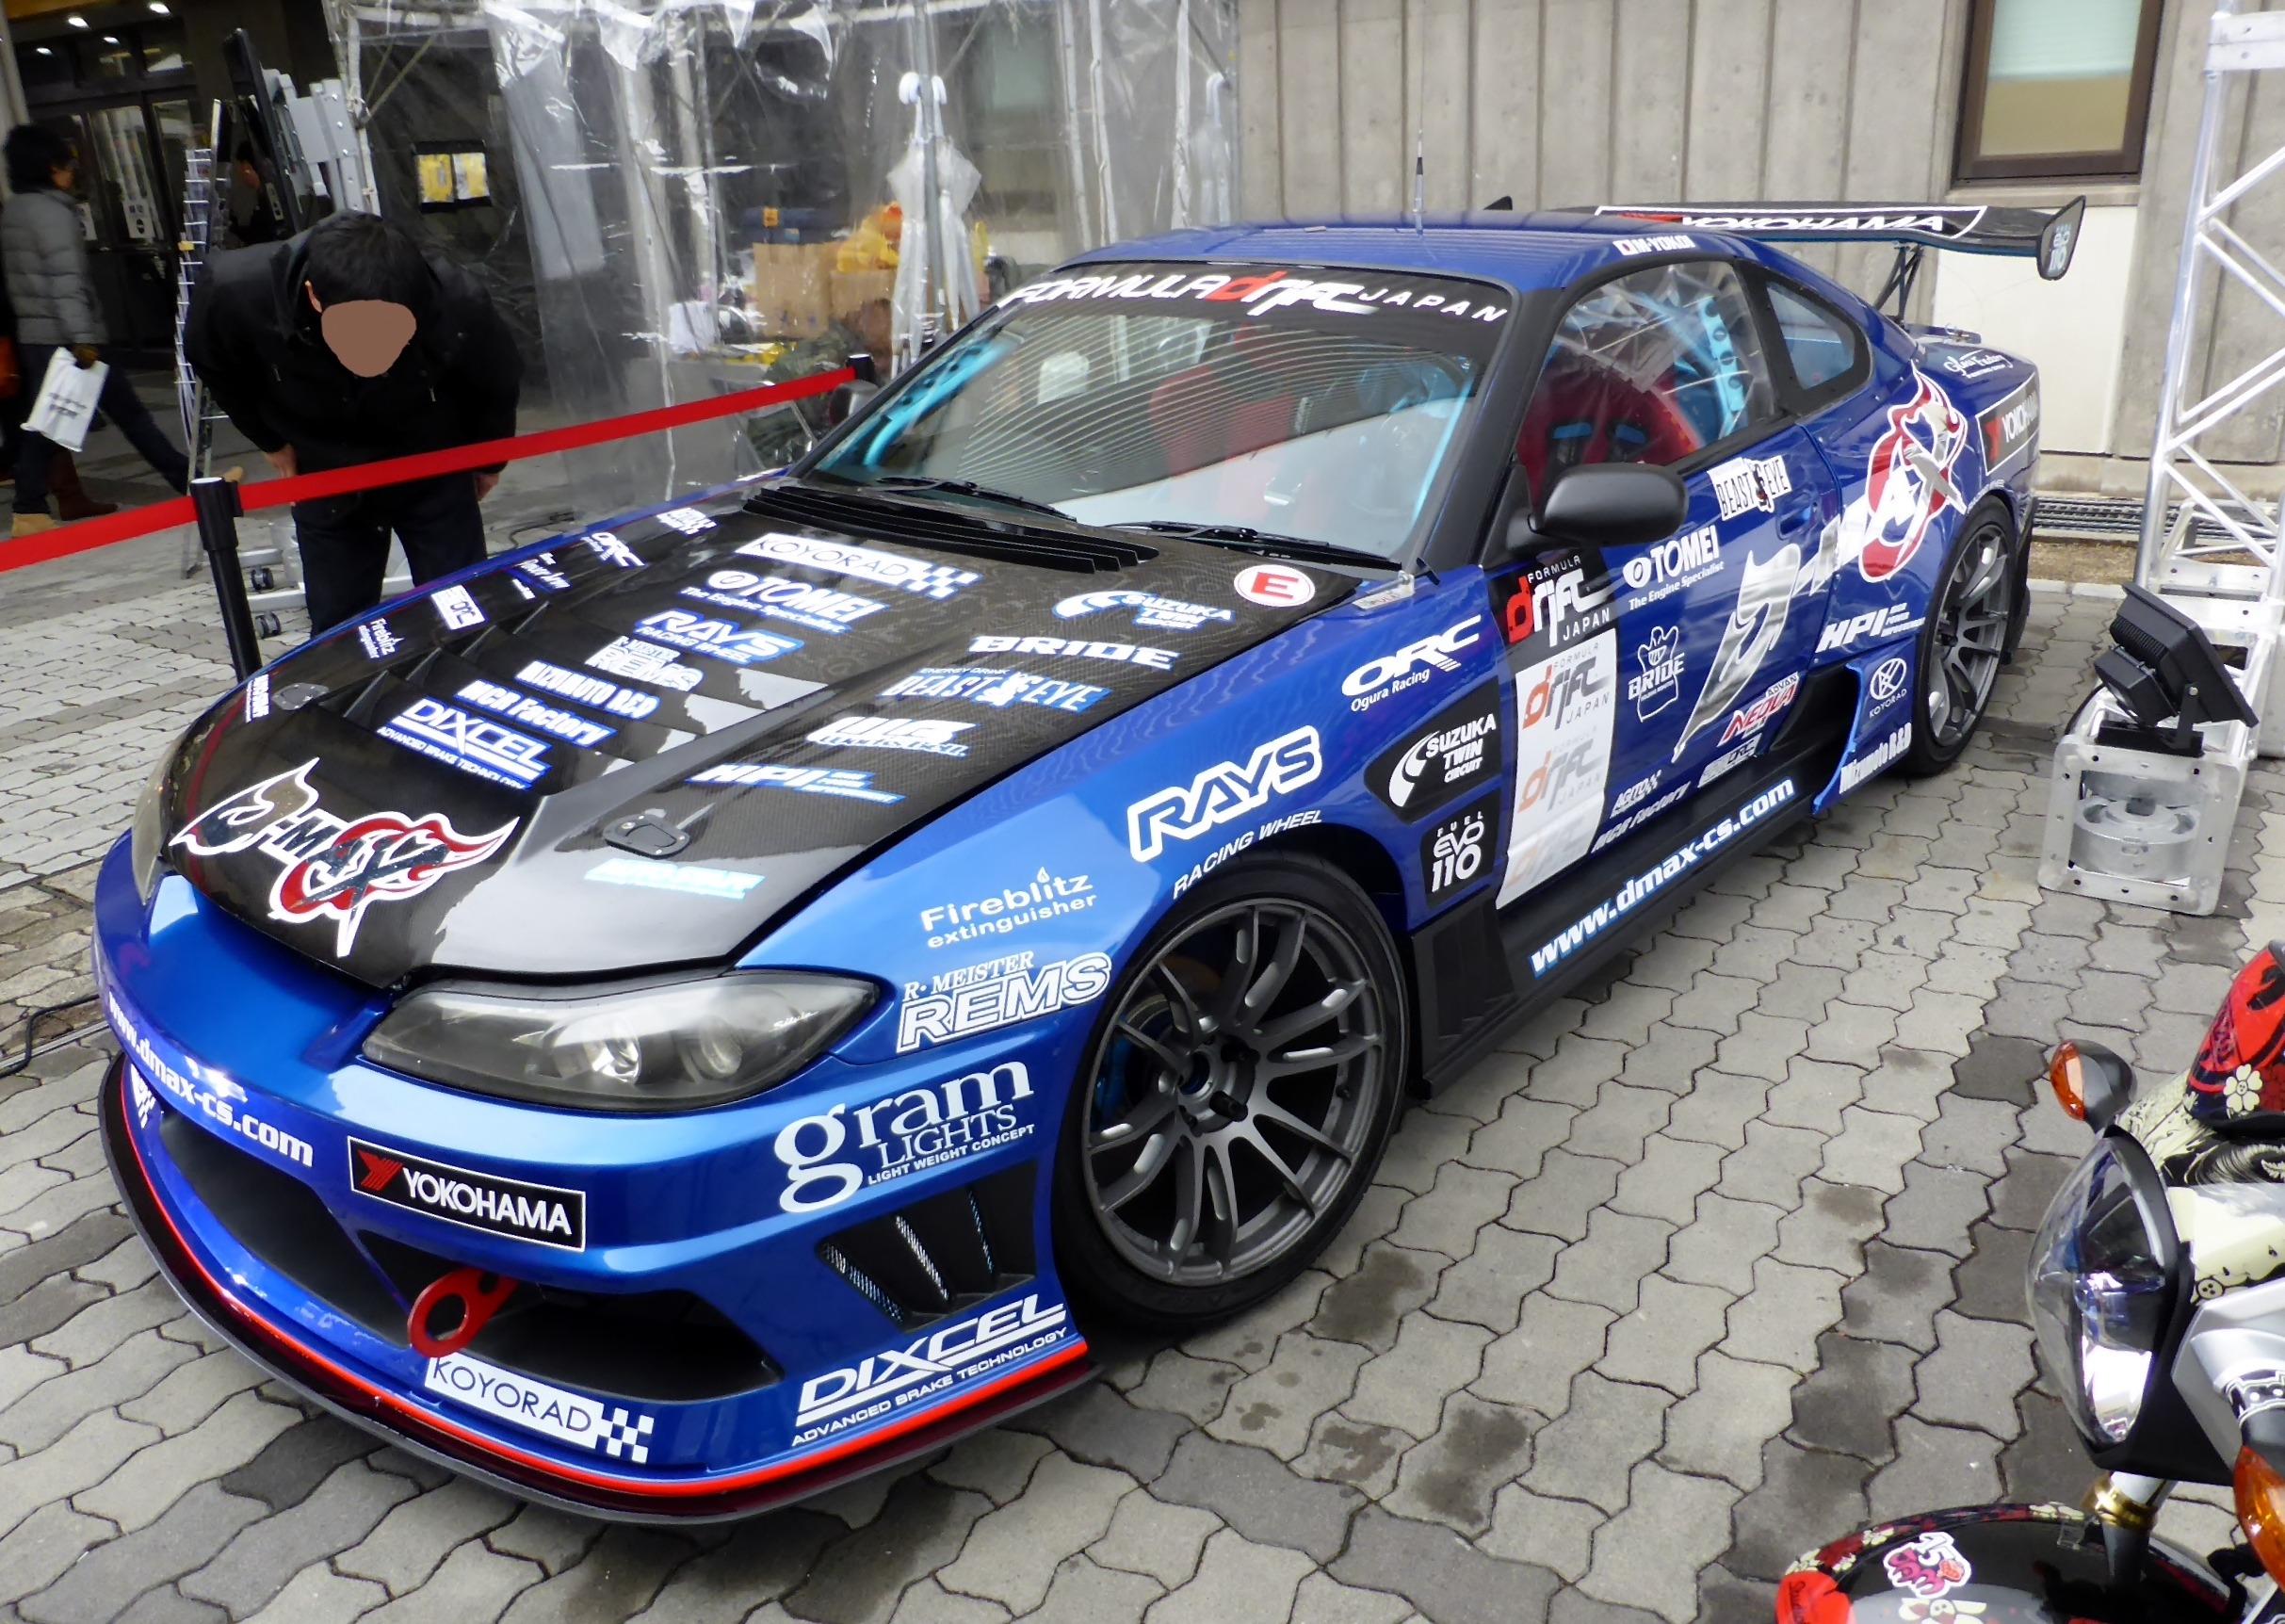 Nissan Silvia S15 drift car built to compete in Formula Drift Japan
